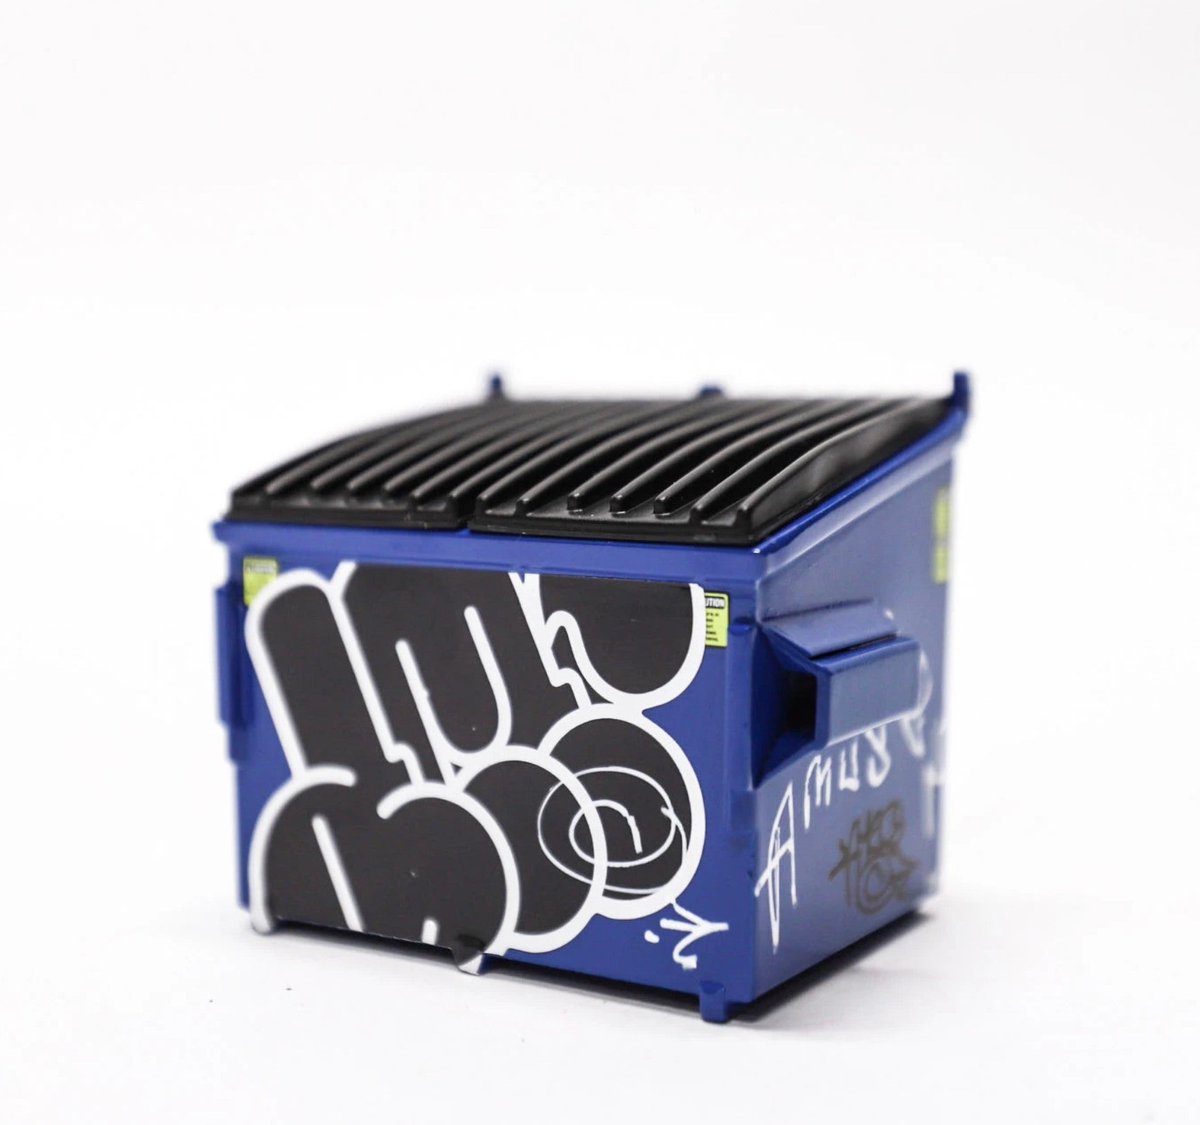 sprayedpaint.com/products/blue-…
Blue Dumpster HPM Metal Sculpture Art Toy by Amuse126
#sculpture #artsculpture #ArtStatue #PopArtSculpture #GraffitiSculpture #art #graffiti #streetart #2021 #Amuse126 #Black #Blue #Bubble Letter #City #Dumpster #Figure #Graffiti #Hand Painted Multiple ...